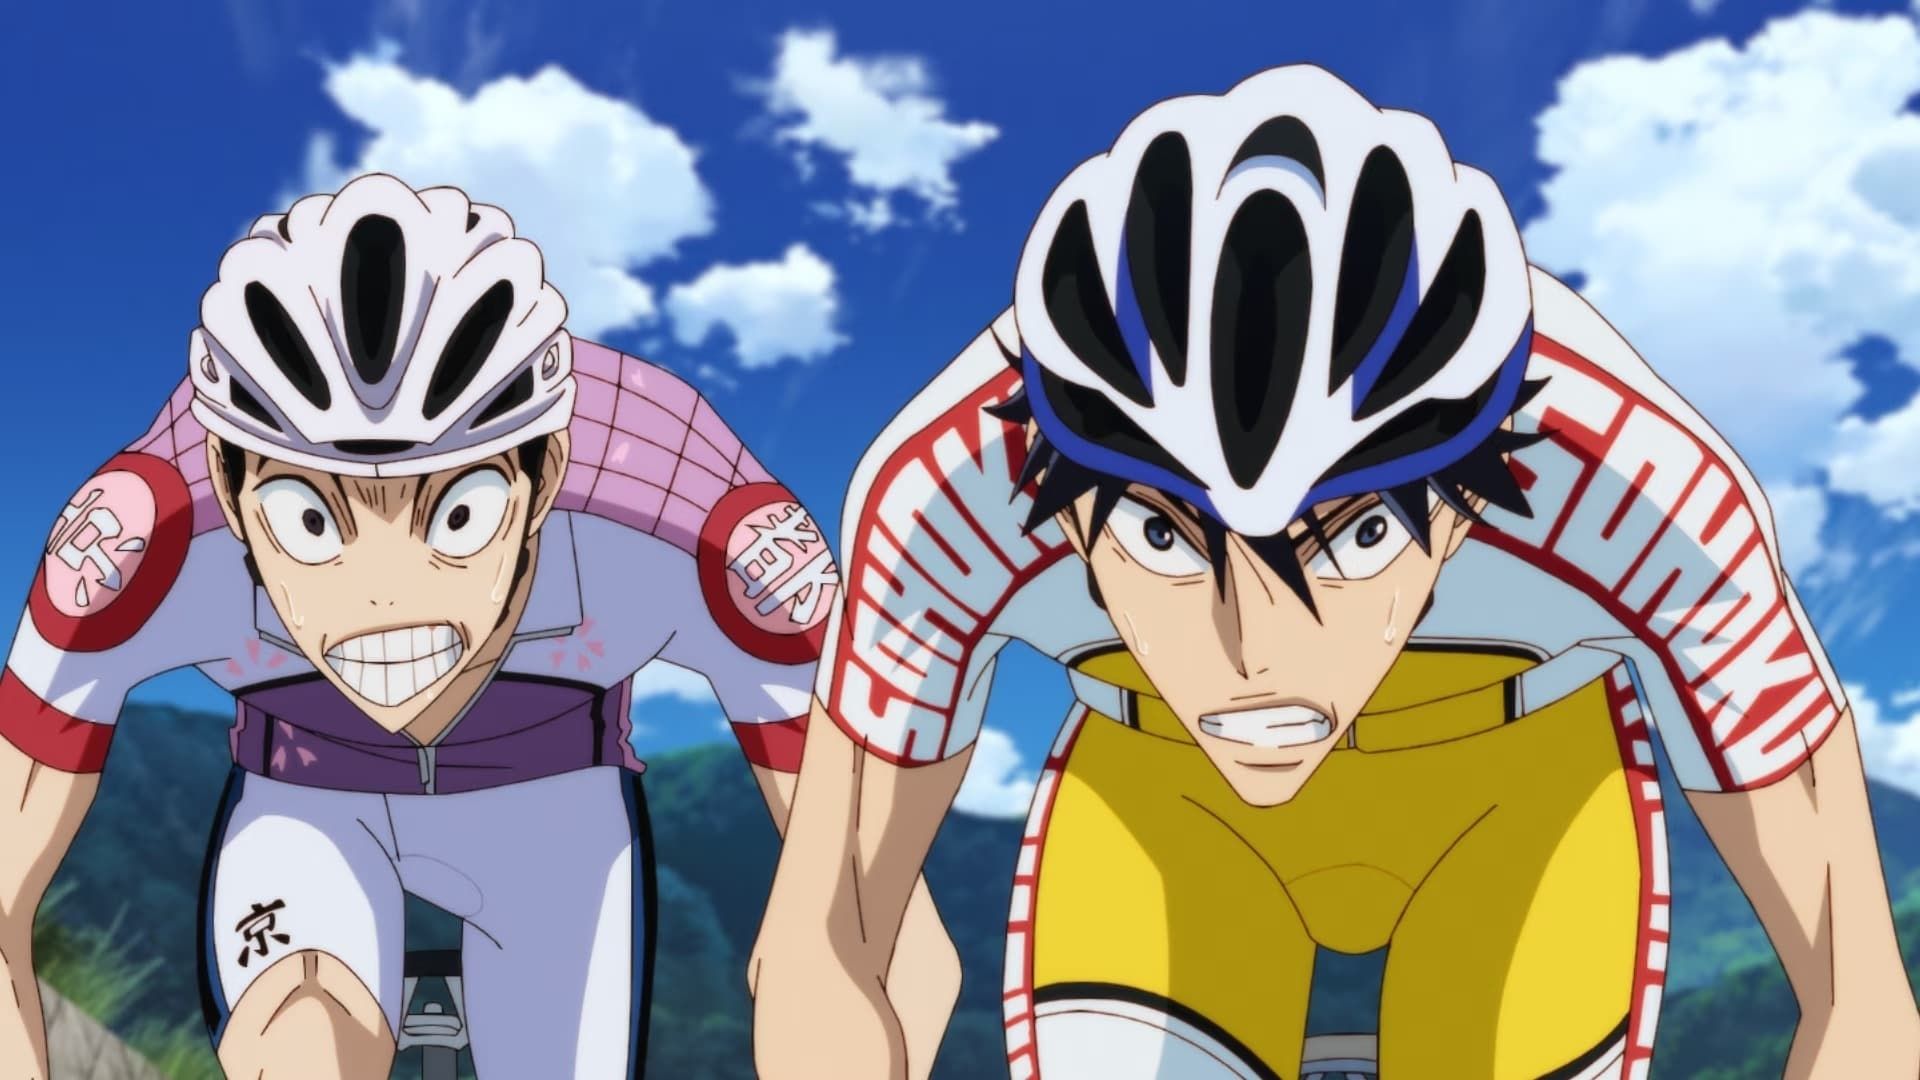 Yowamushi Pedal: Season 5: Limit Break - Prime Video